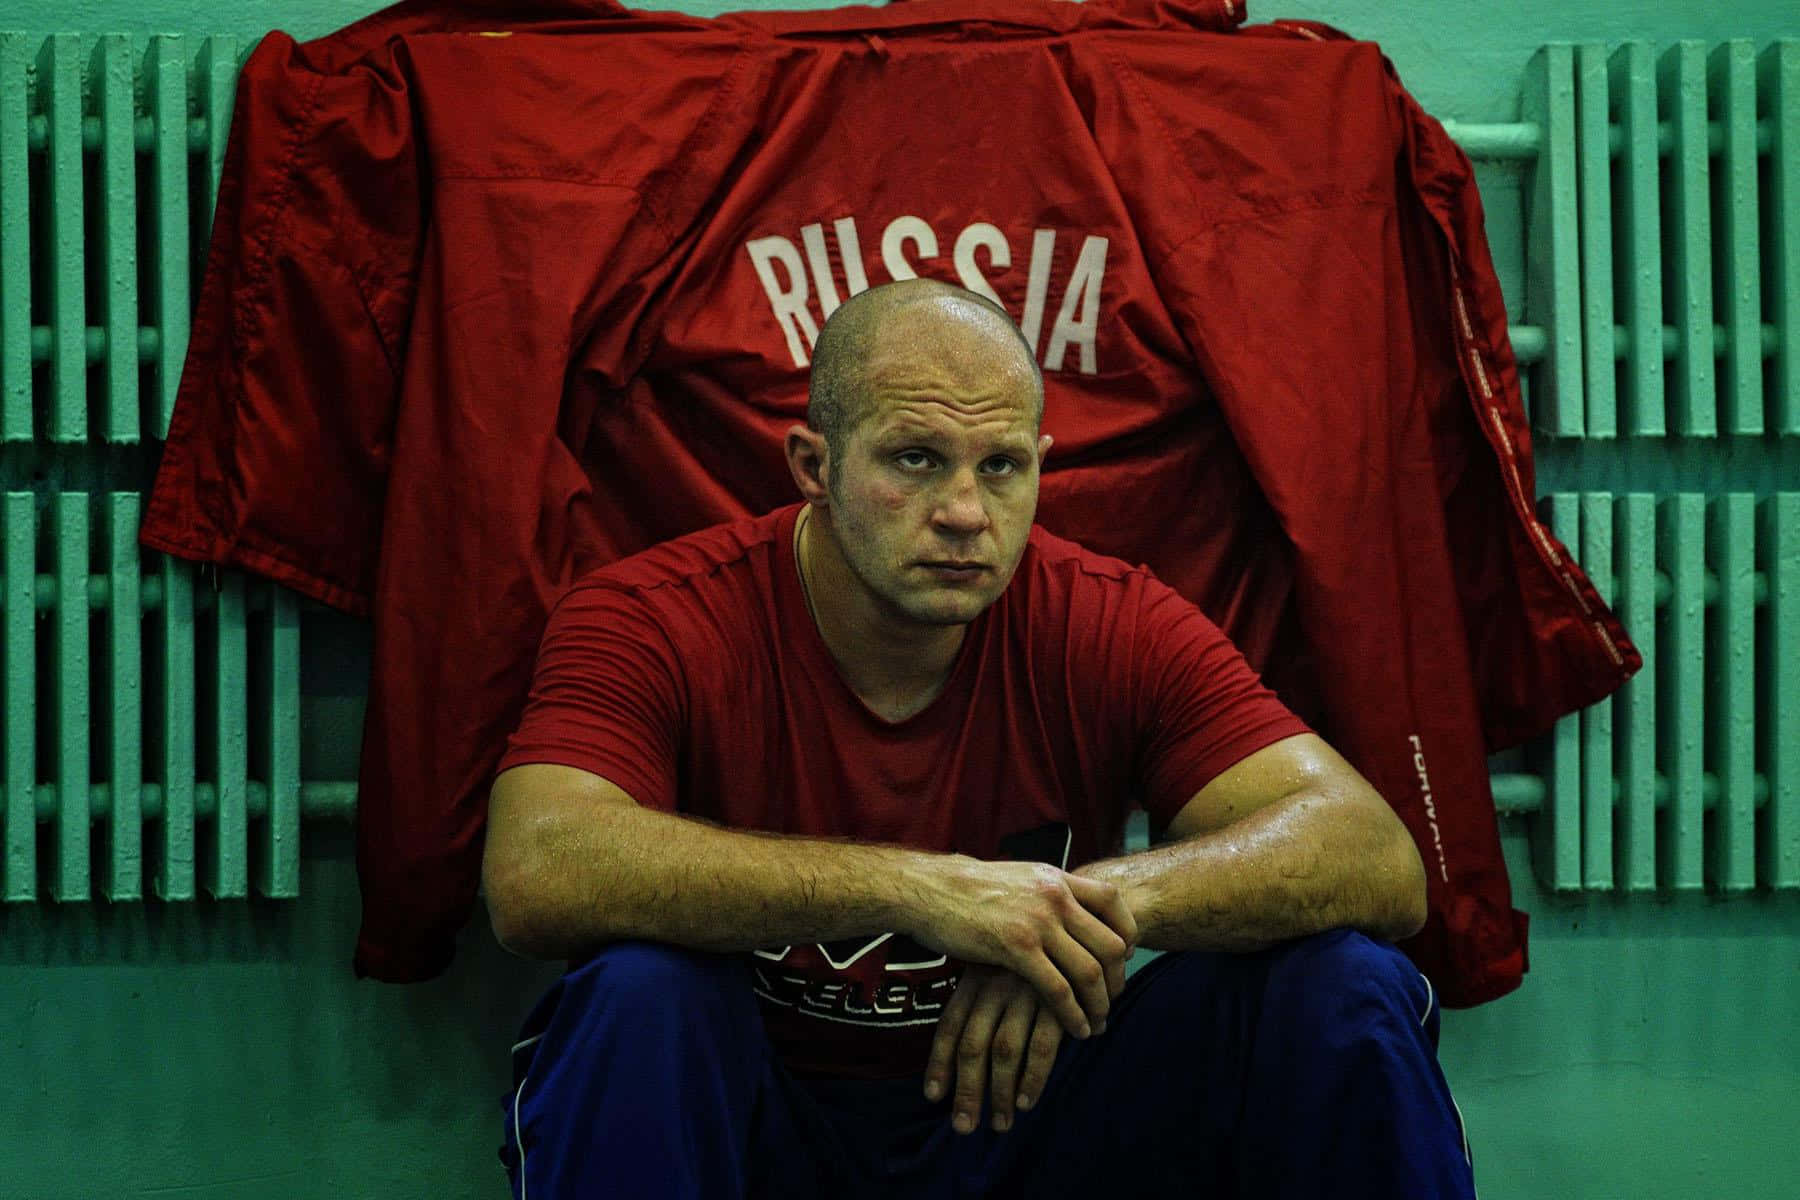 Russian Athlete Fedor Emelianenko Photograph Wallpaper